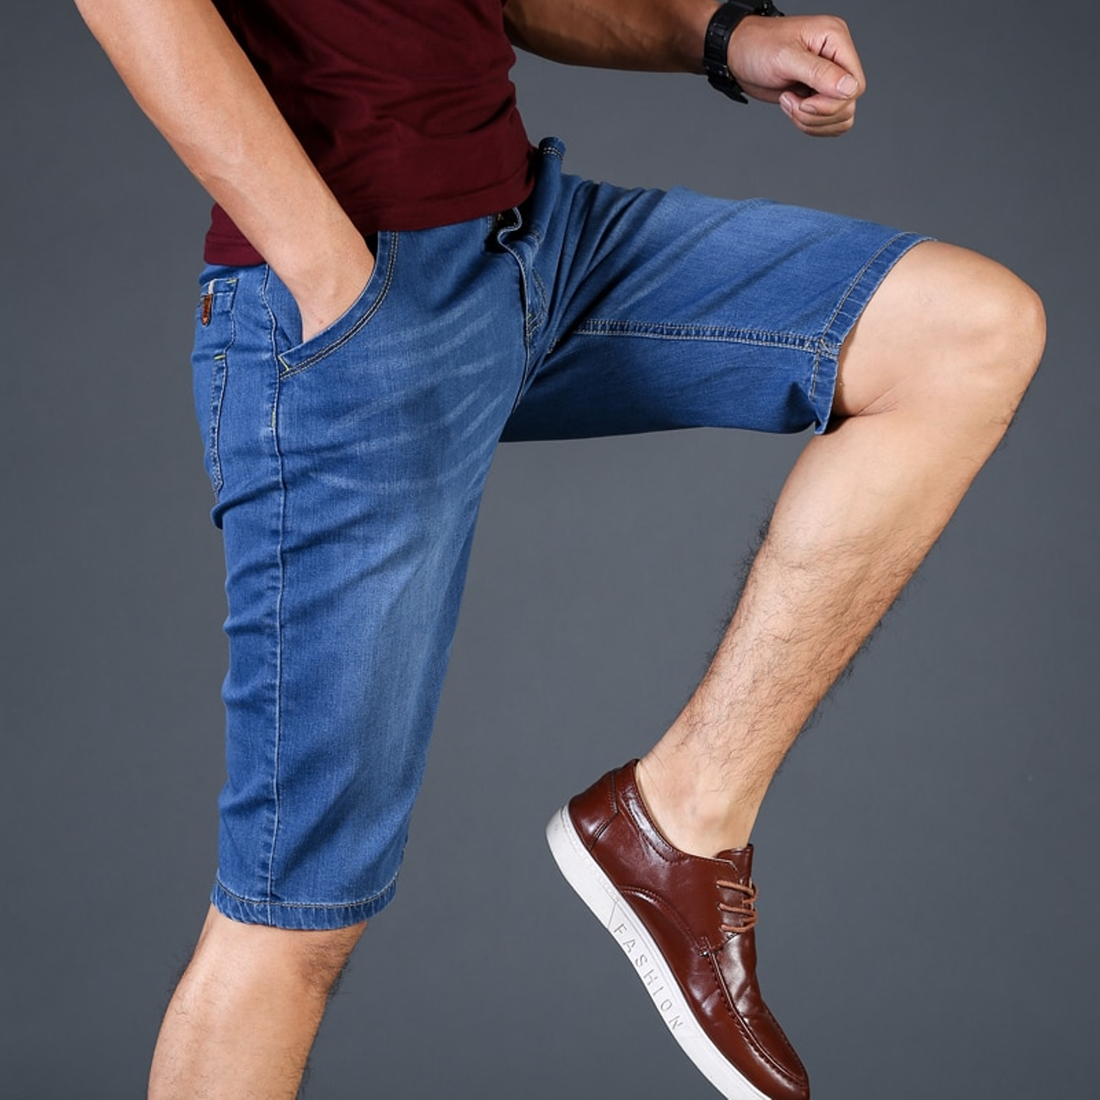 Men's Summer Casual Denim Stretchy Shorts